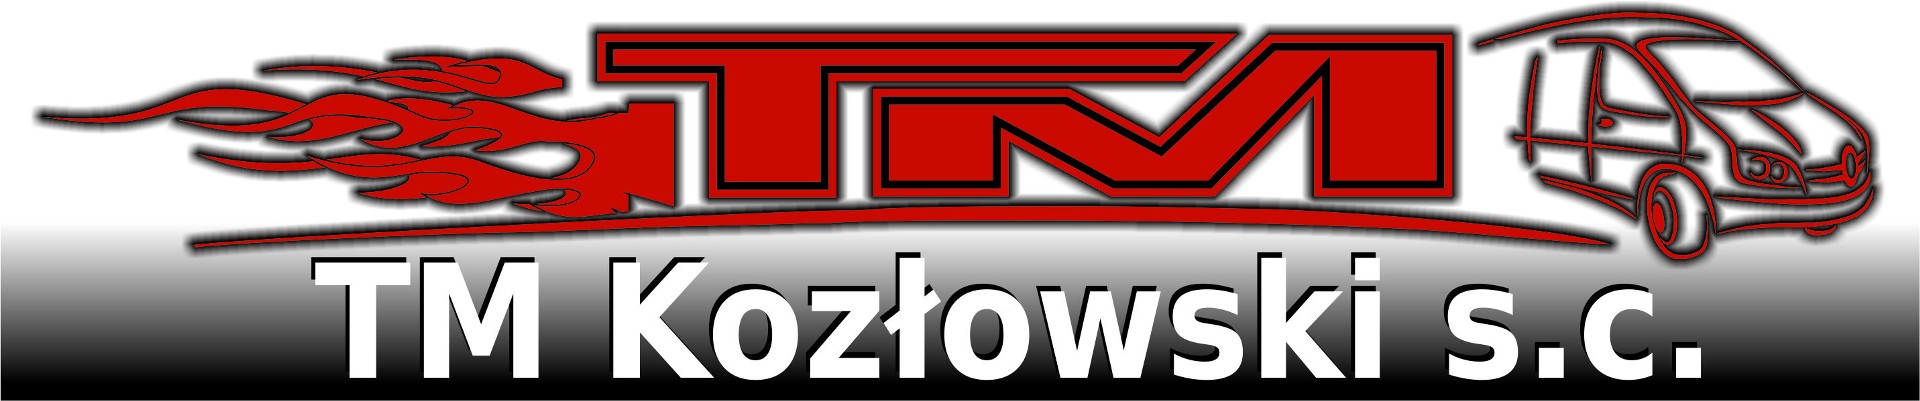 TM Kozłowski s.c. logo